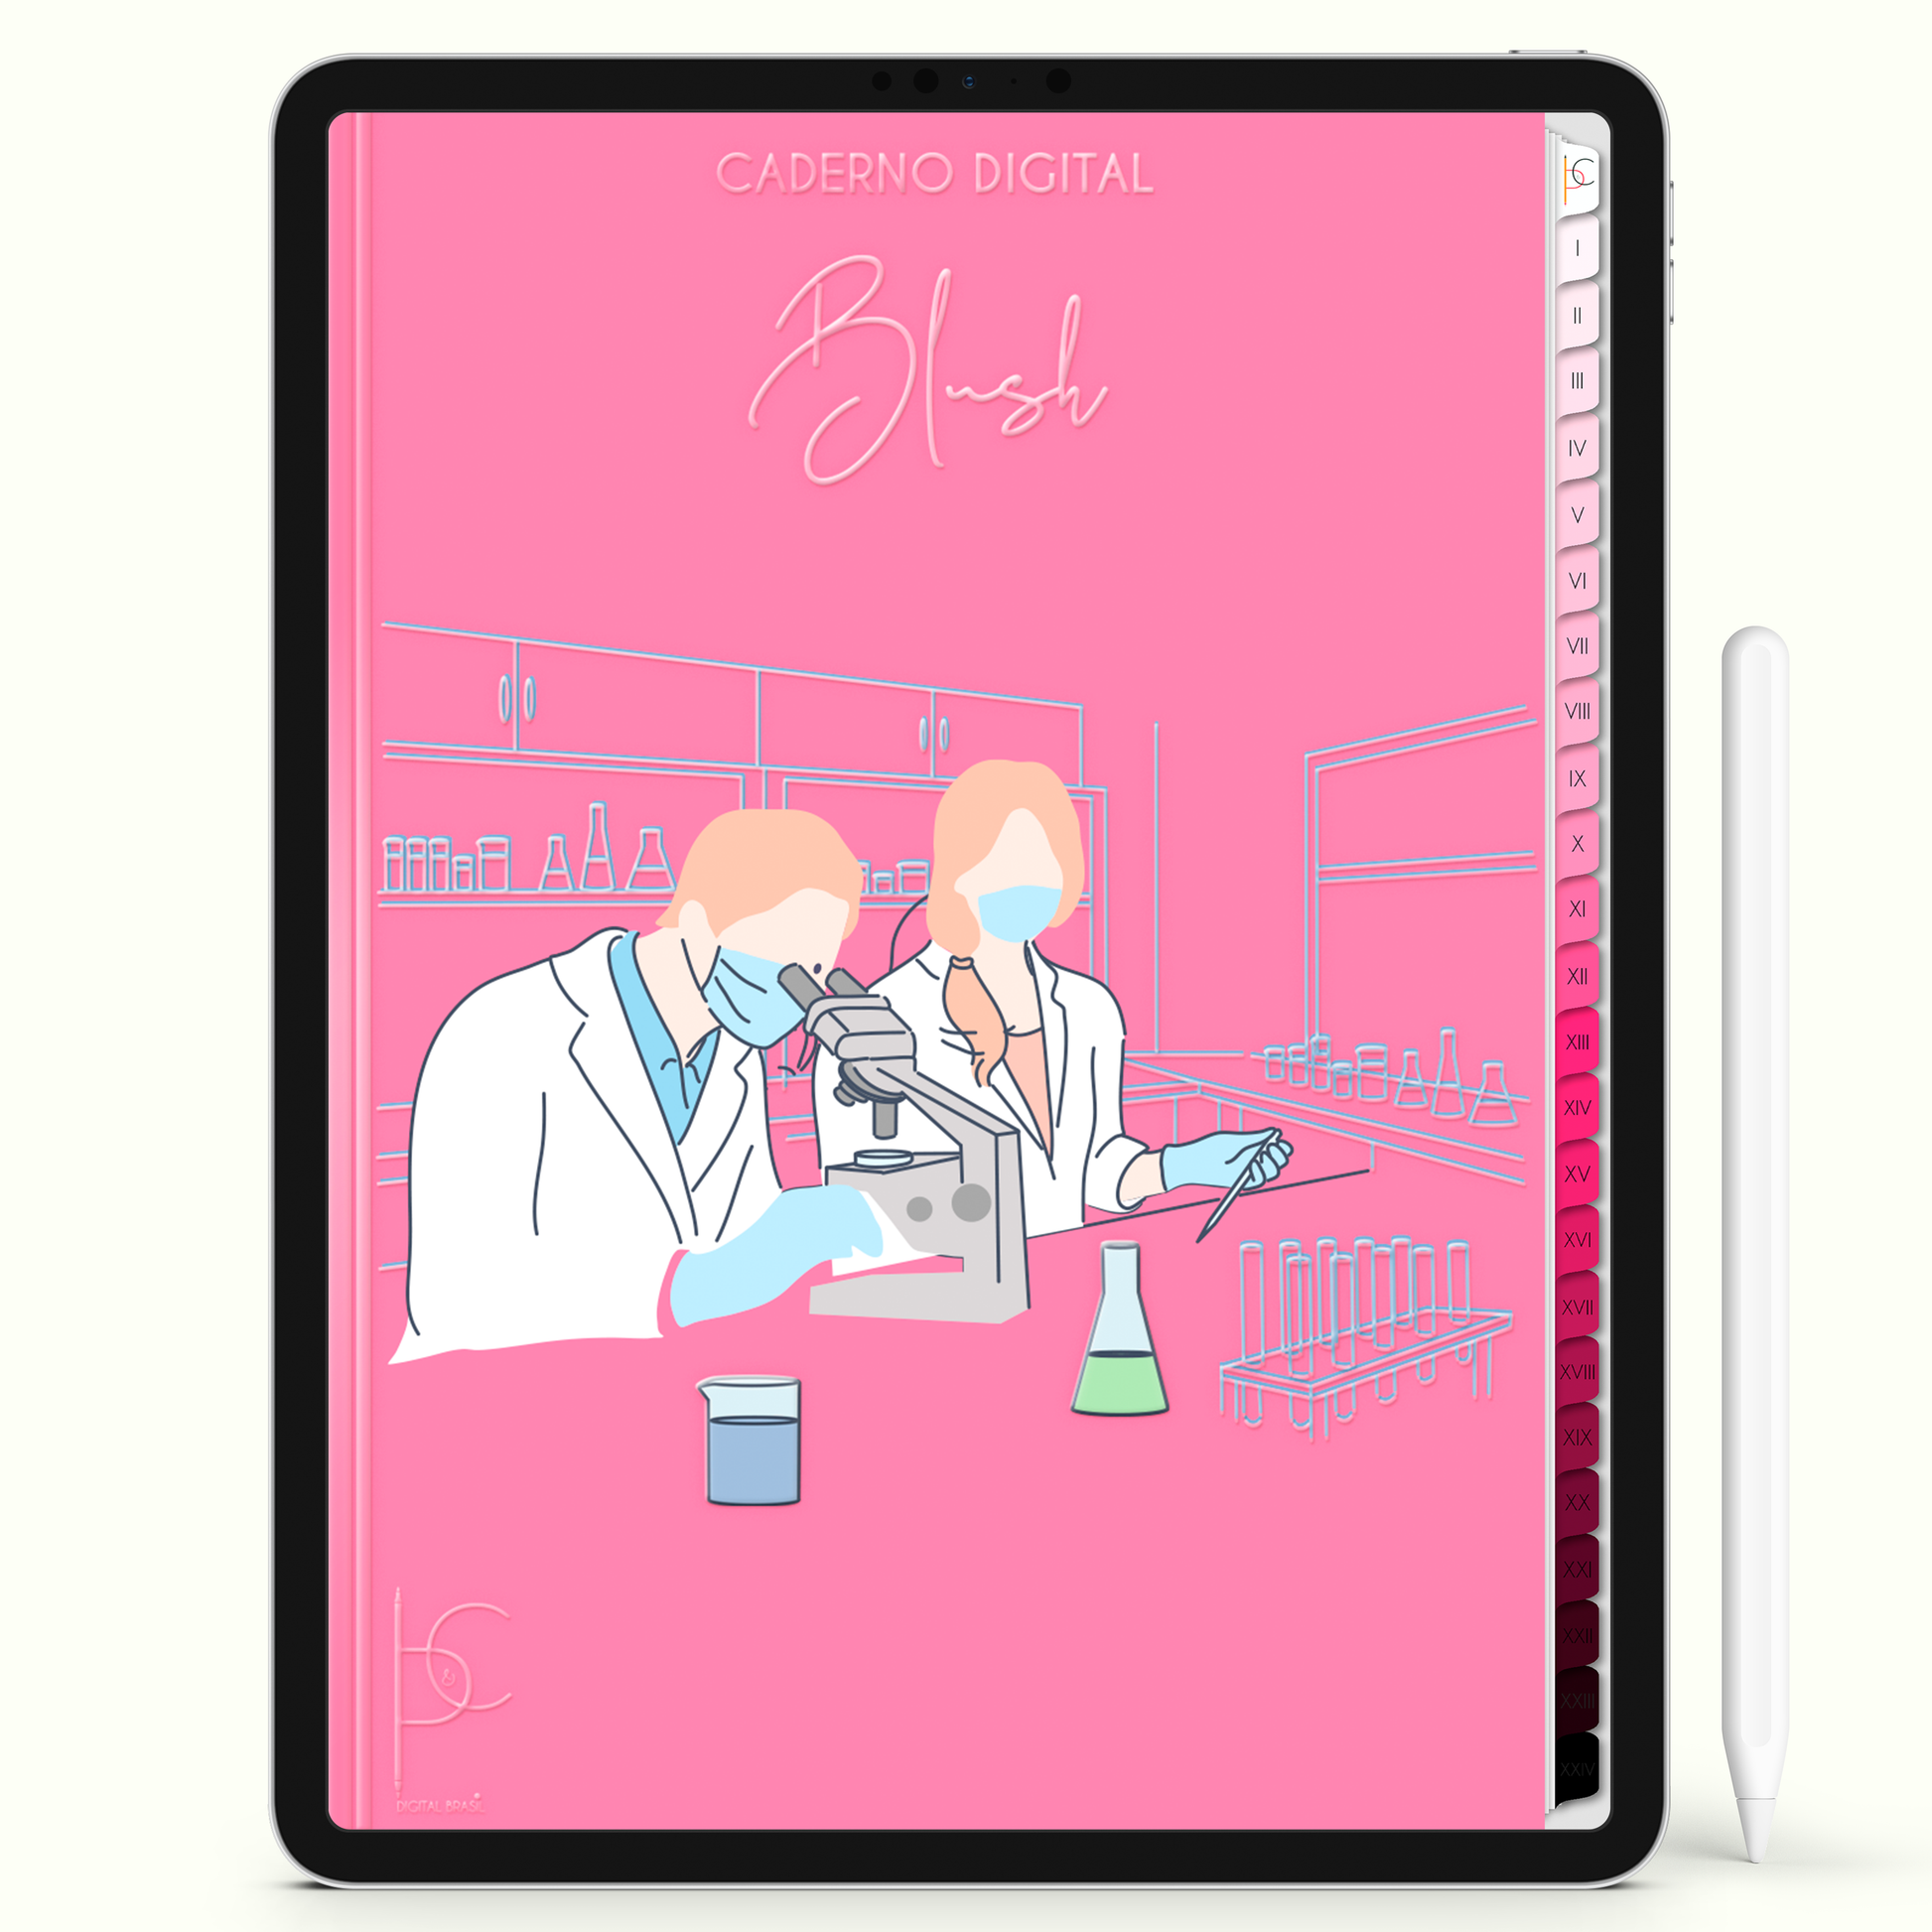 Caderno Digital Blush Estudante de Medicina Study Medicine 24 Matérias • iPad e Tablet Android • Download instantâneo • Sustentável